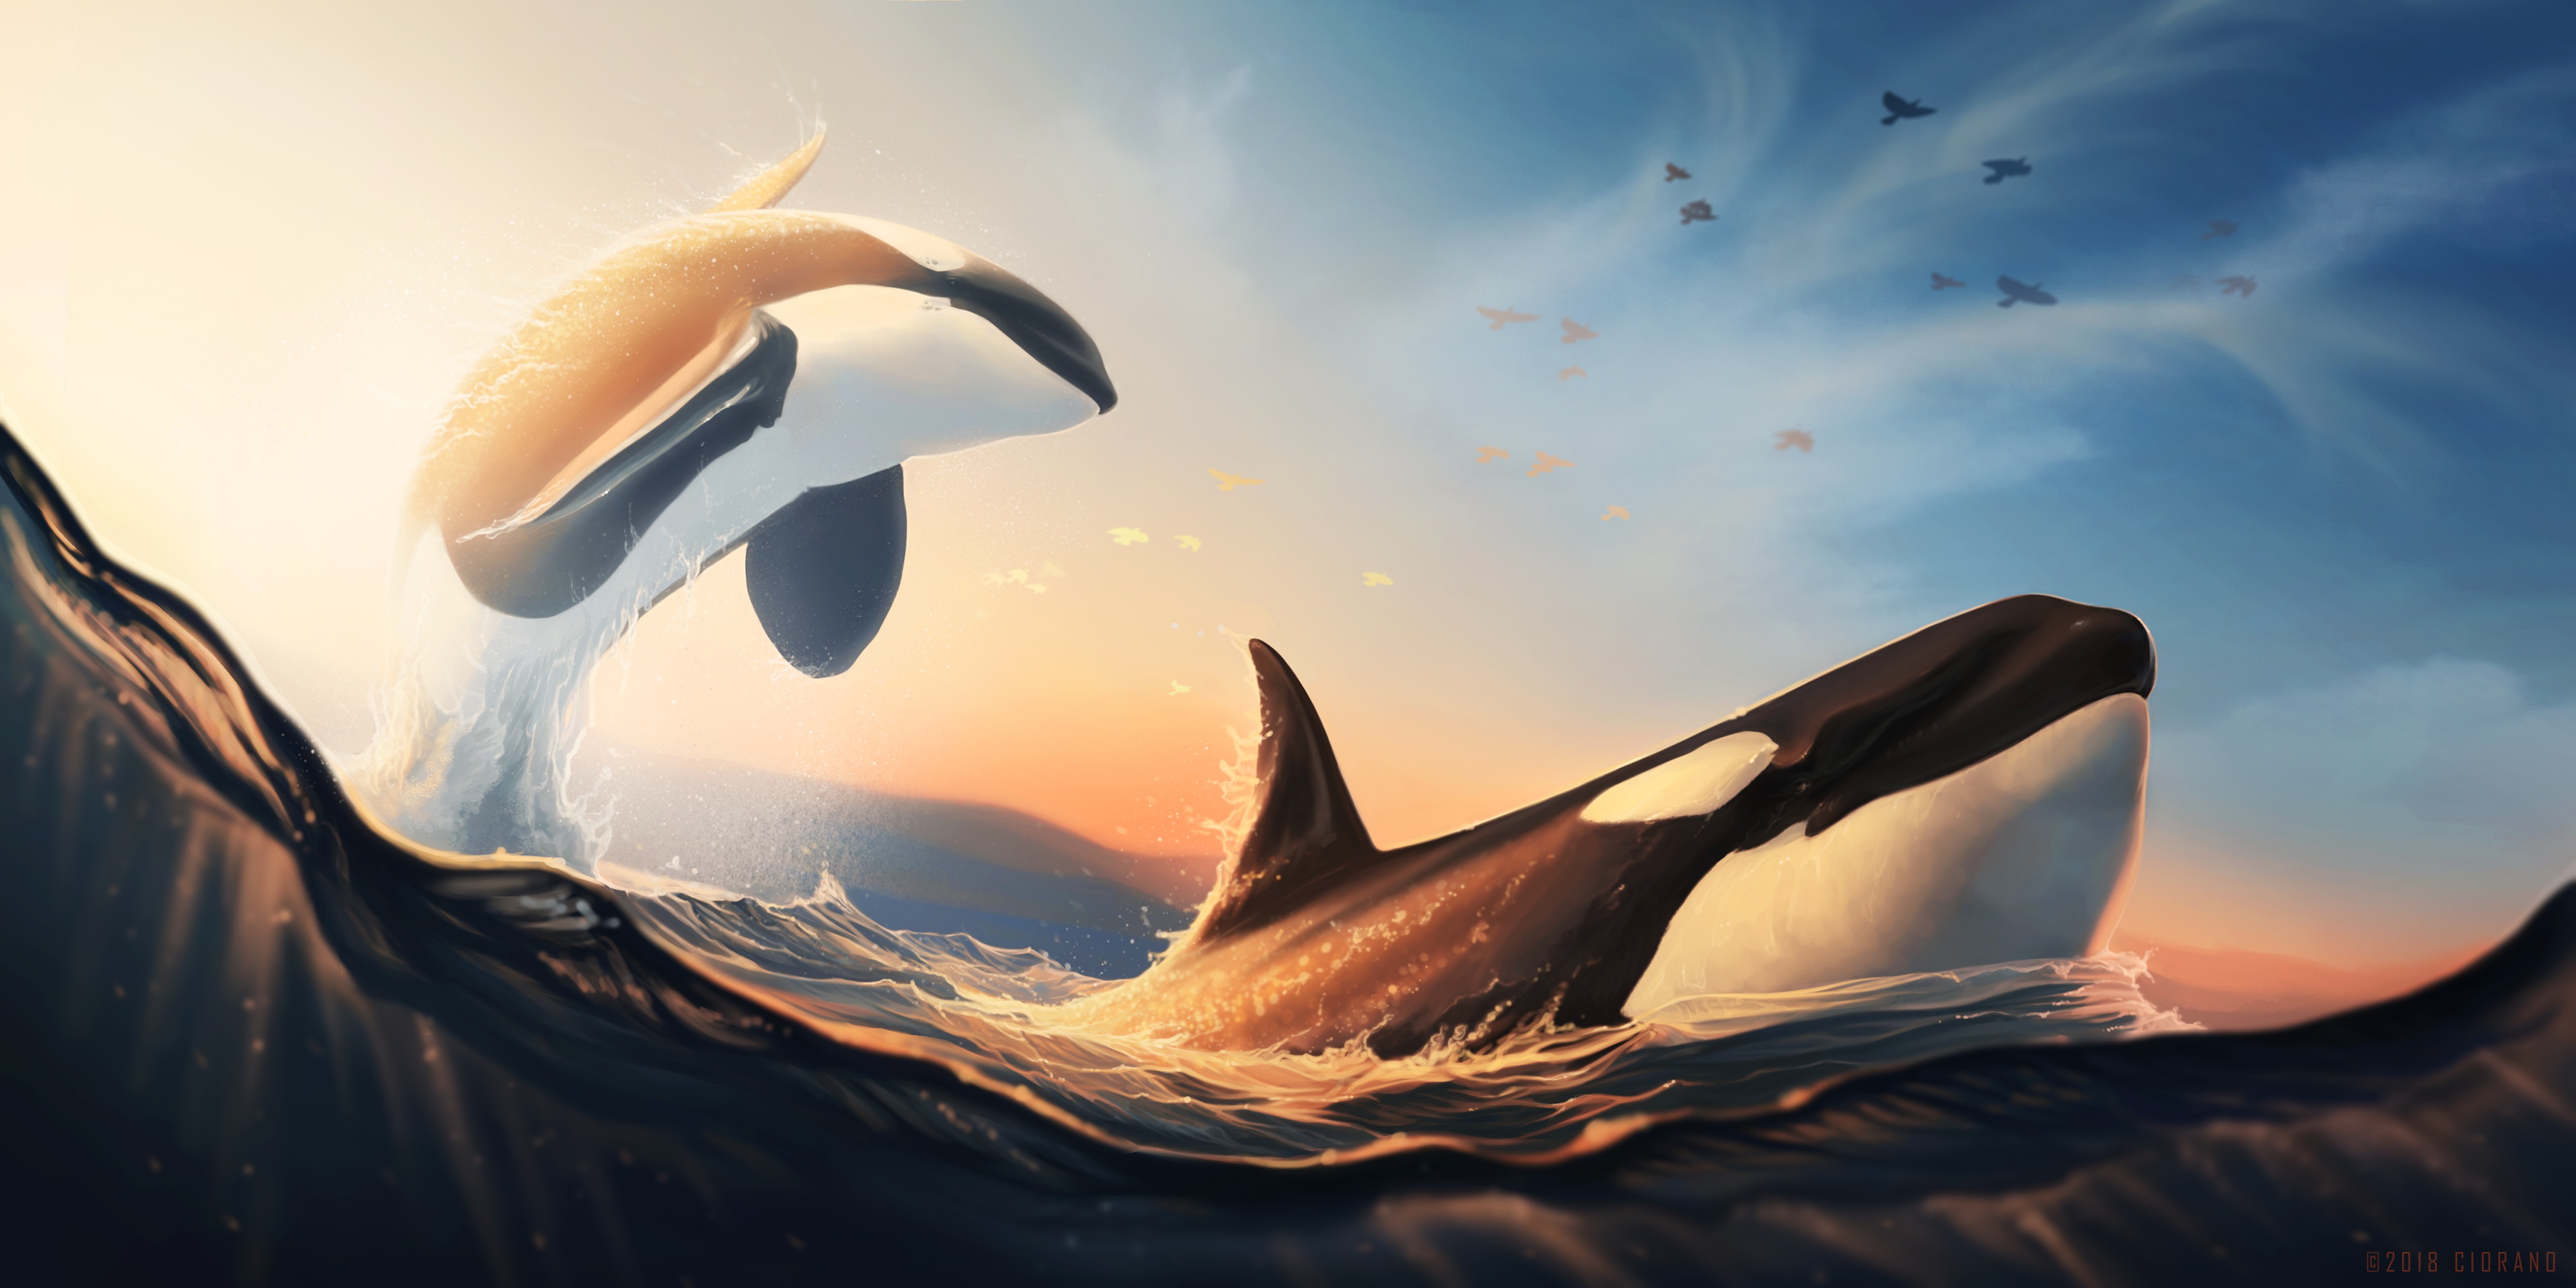 General 4000x2000 animals whale sea nature mammals artwork orca birds digital art watermarked 2018 (year)